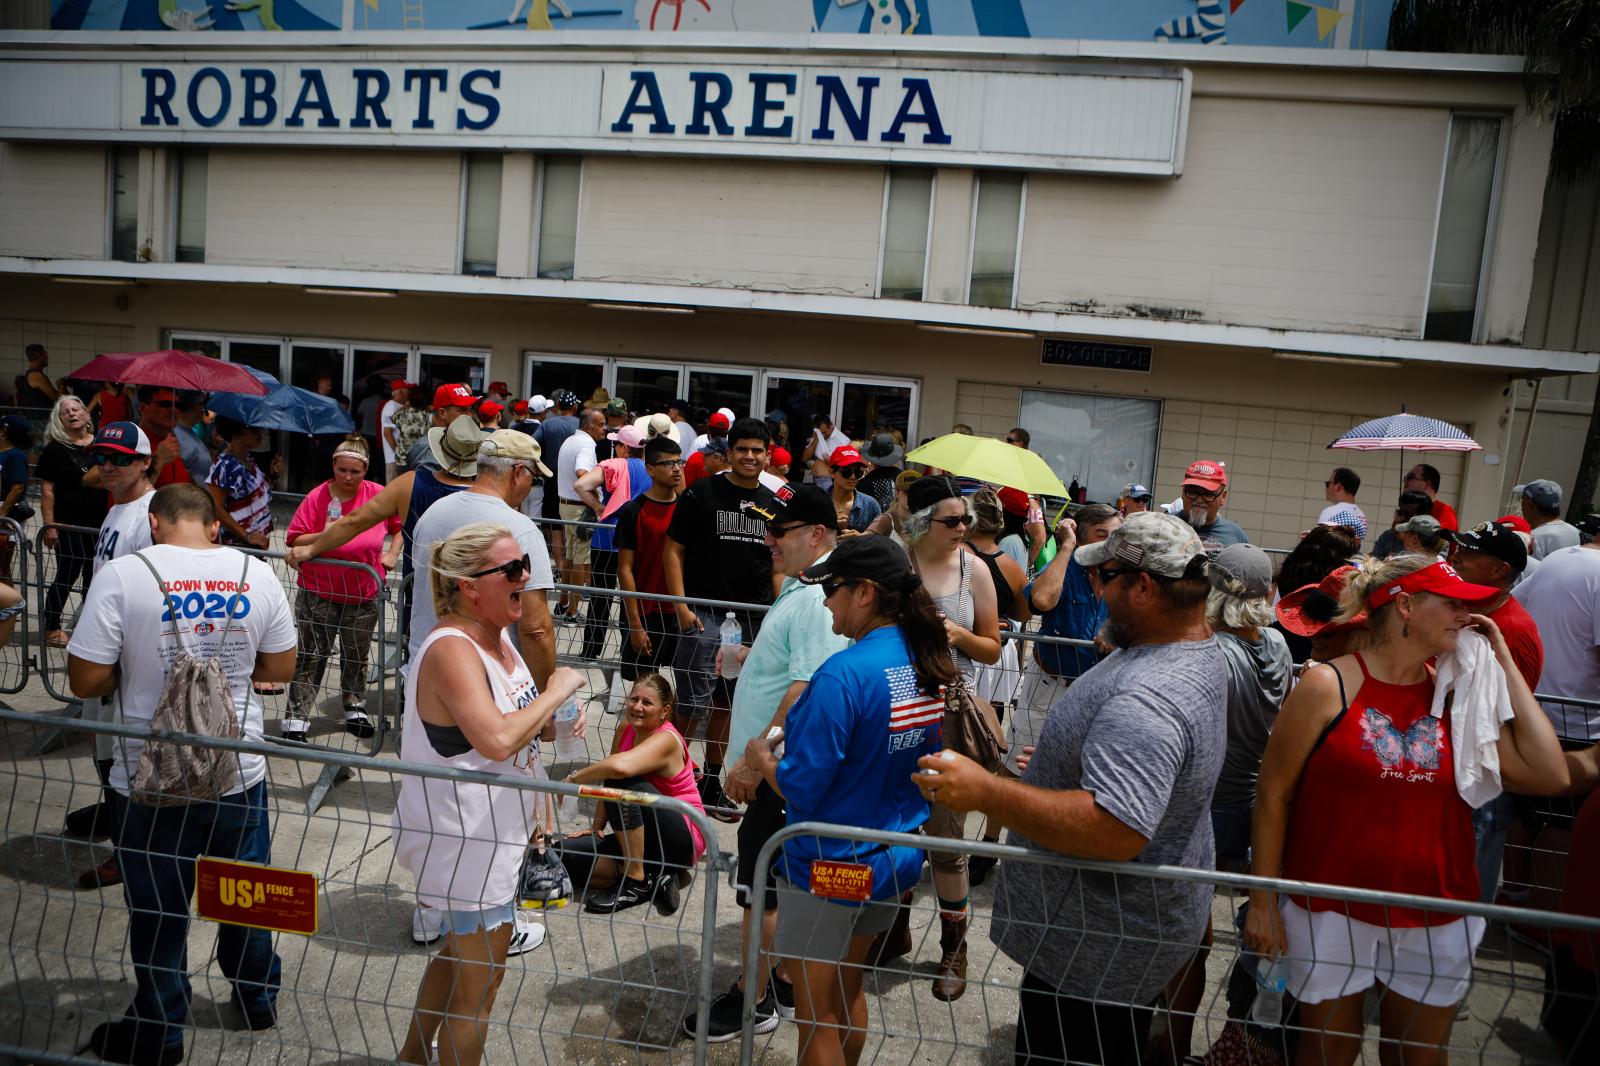 SARASOTA, FL - JULY 03: People ...a Marie Uzcategui/Getty Images)